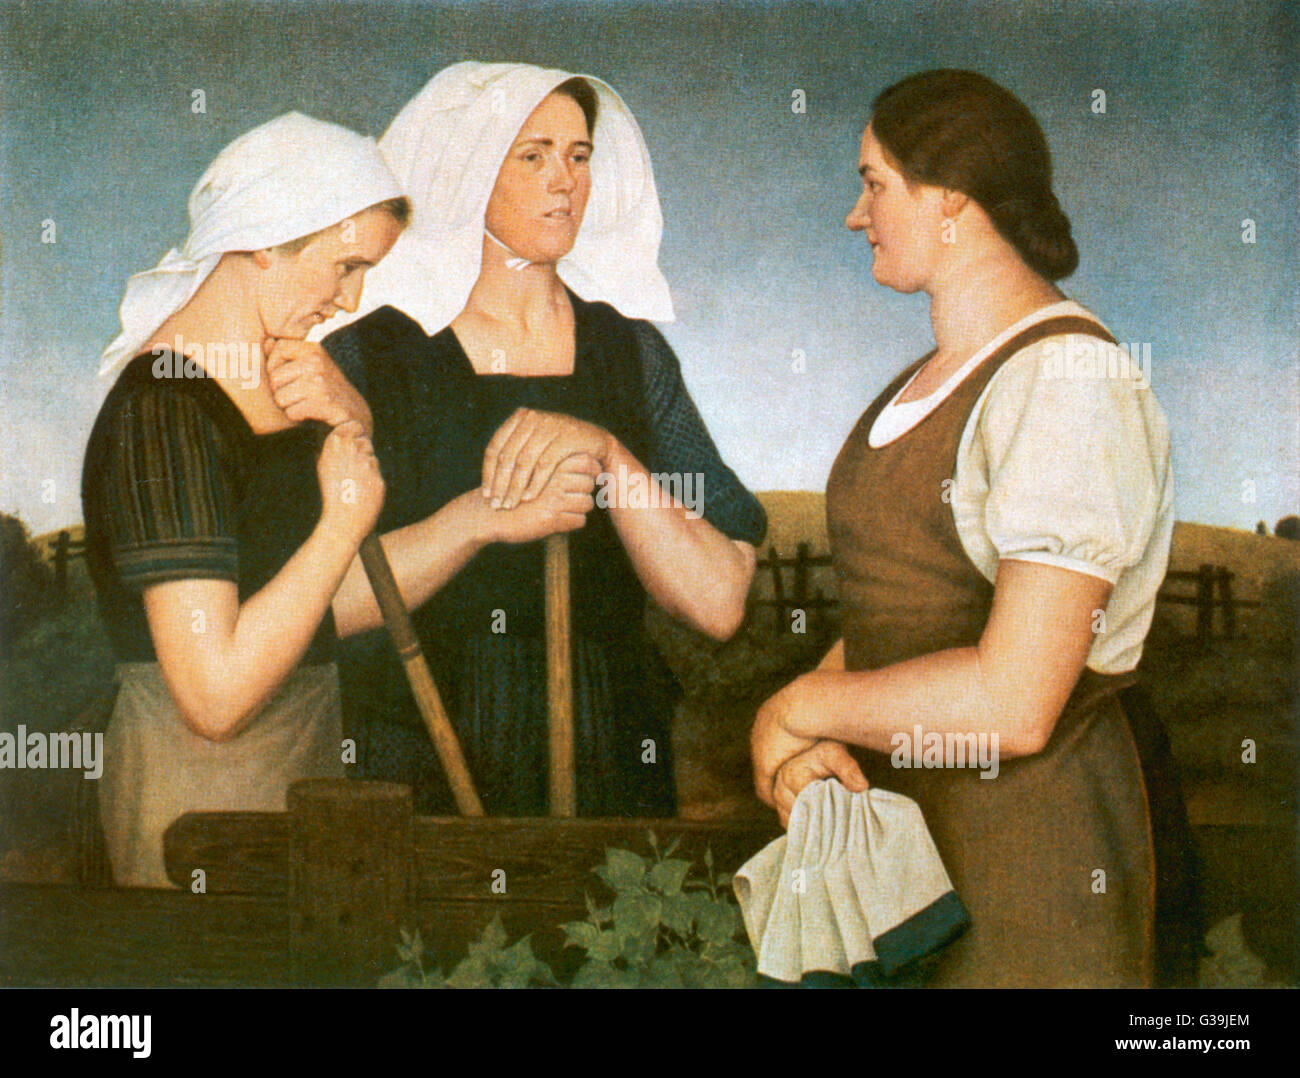 SOLID GERMAN WOMEN Stock Photo